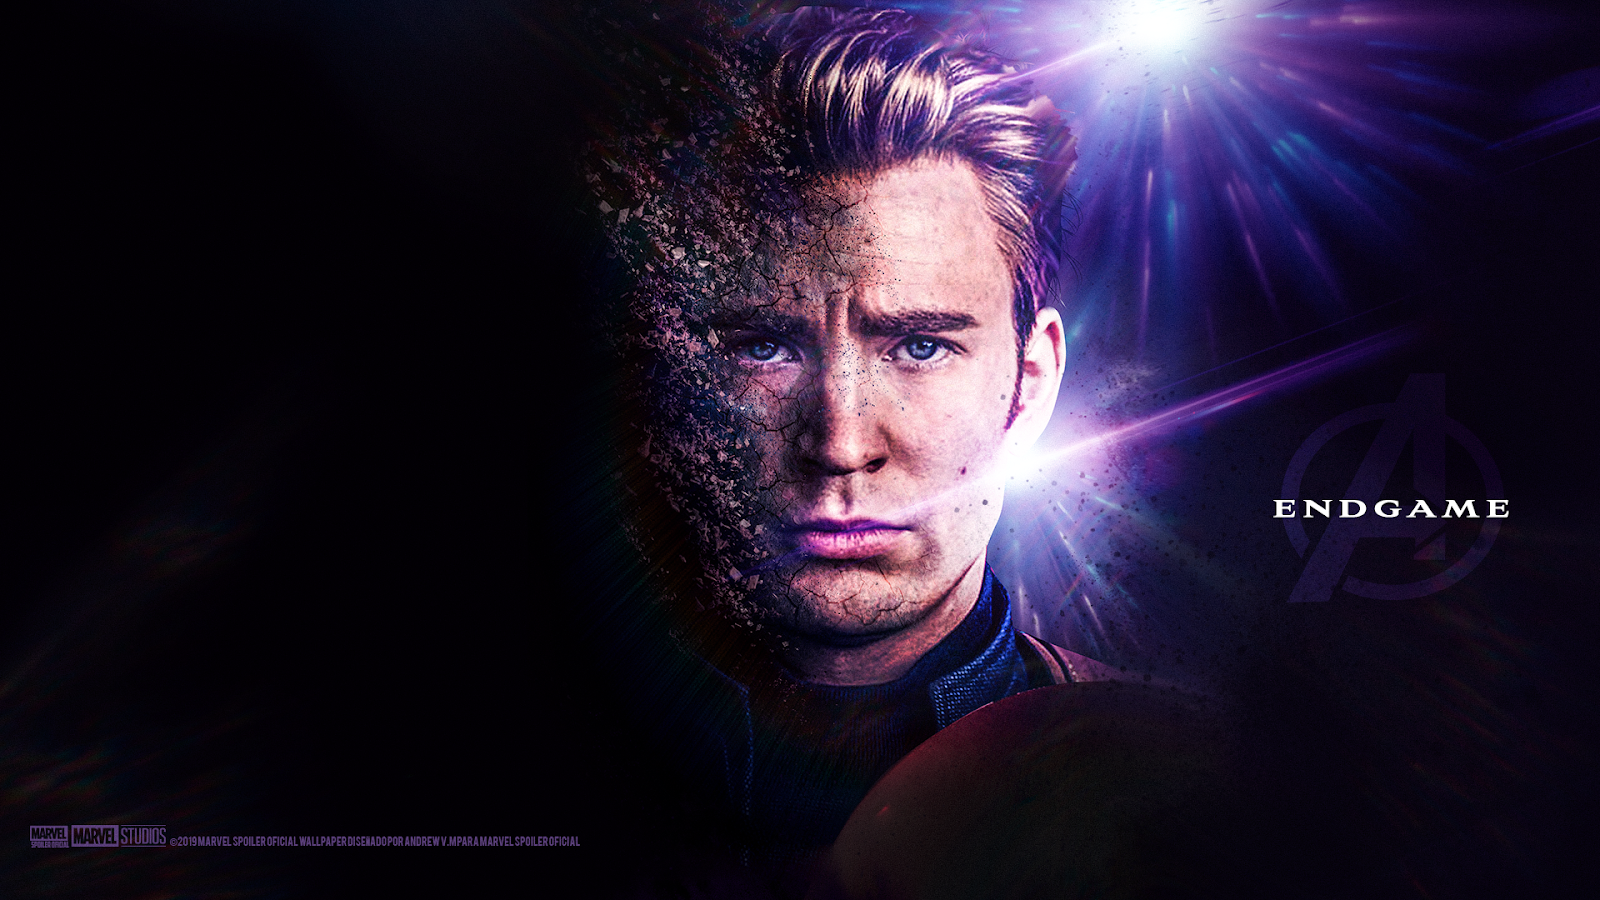 Avengers End Game Wallpaper In HD 4k Ft Captain America Iron